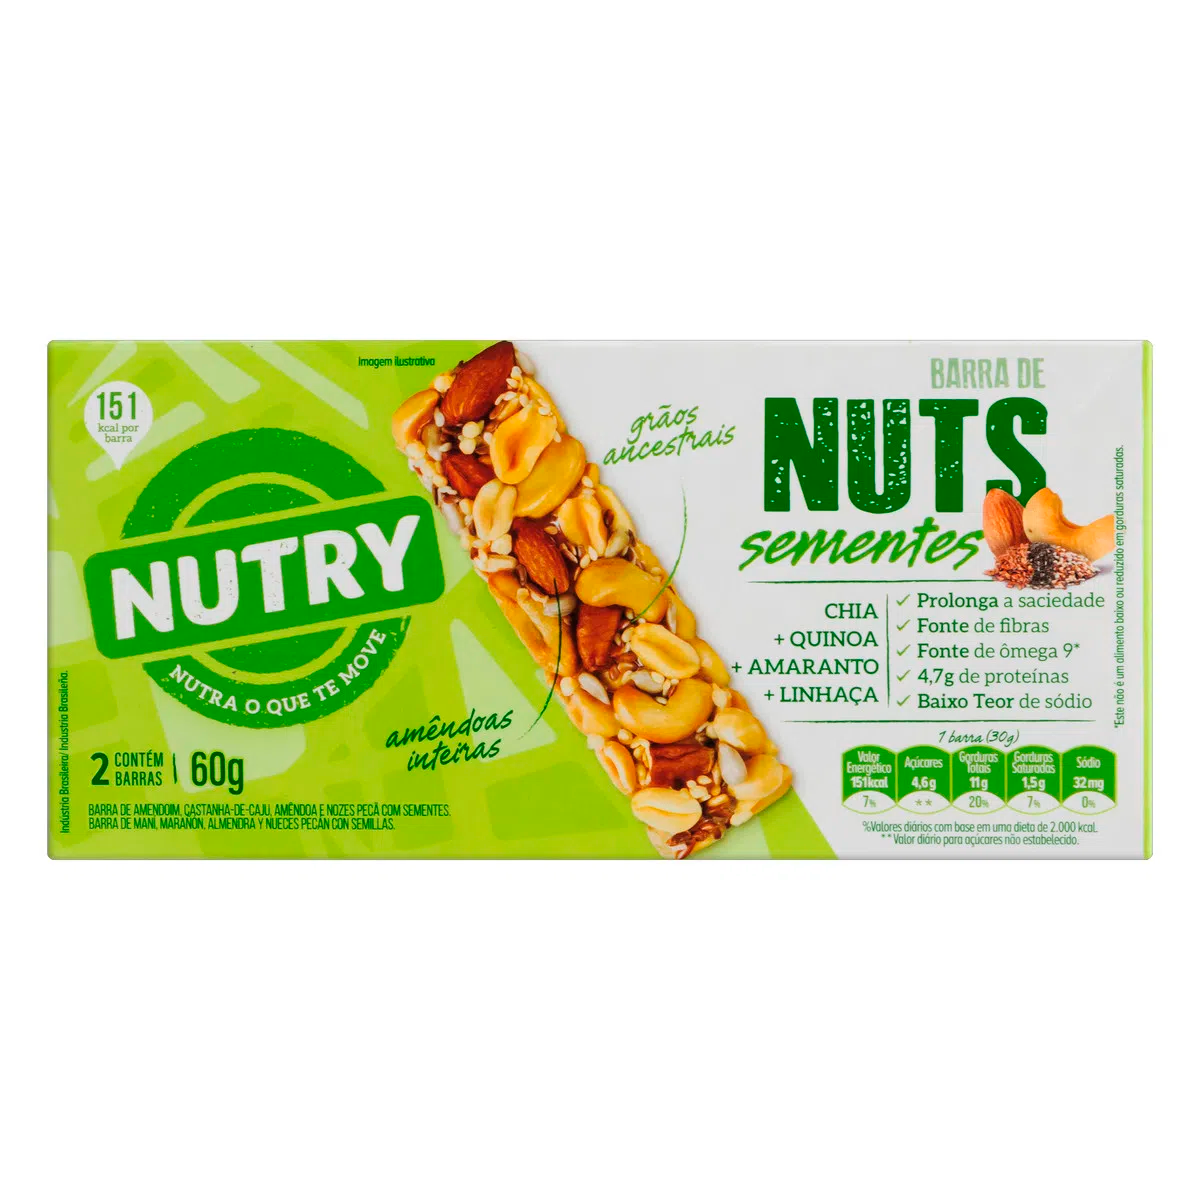 7891331014797 - PACK BARRA DE NUTS SEMENTES NUTRY CAIXA 60G 2 UNIDADES